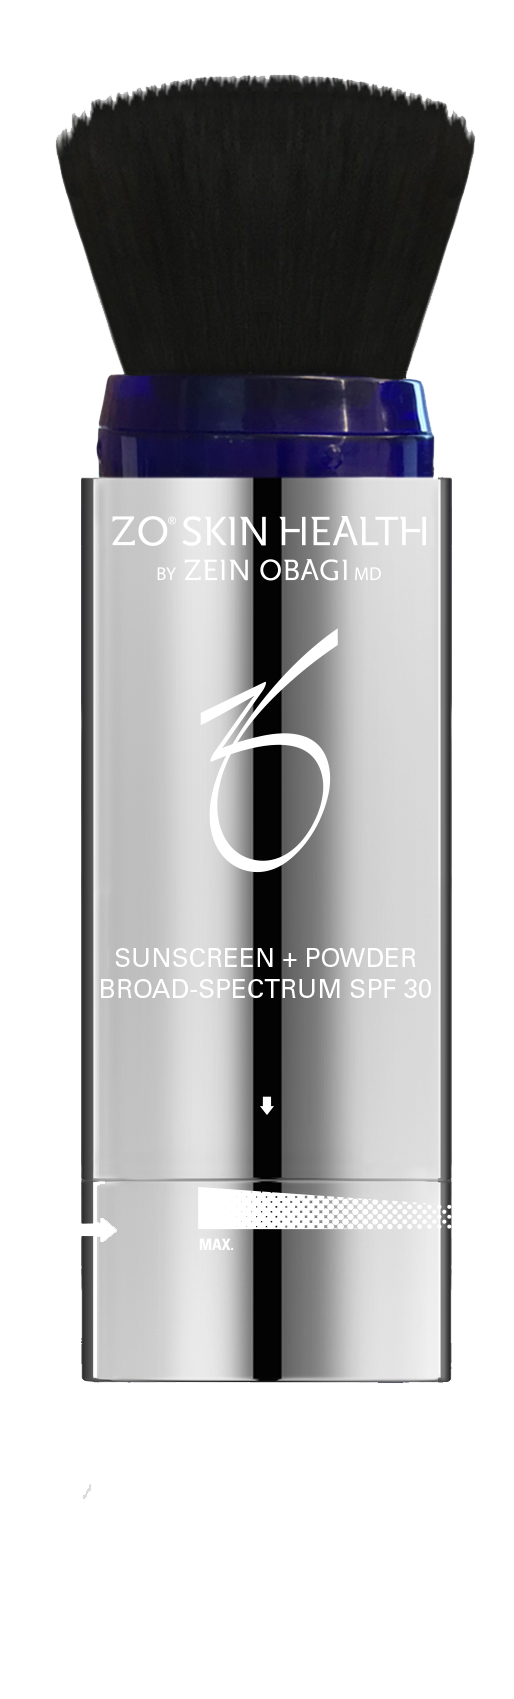 ZO Sunscreen + Powder Broad-Spectrum SPF 30